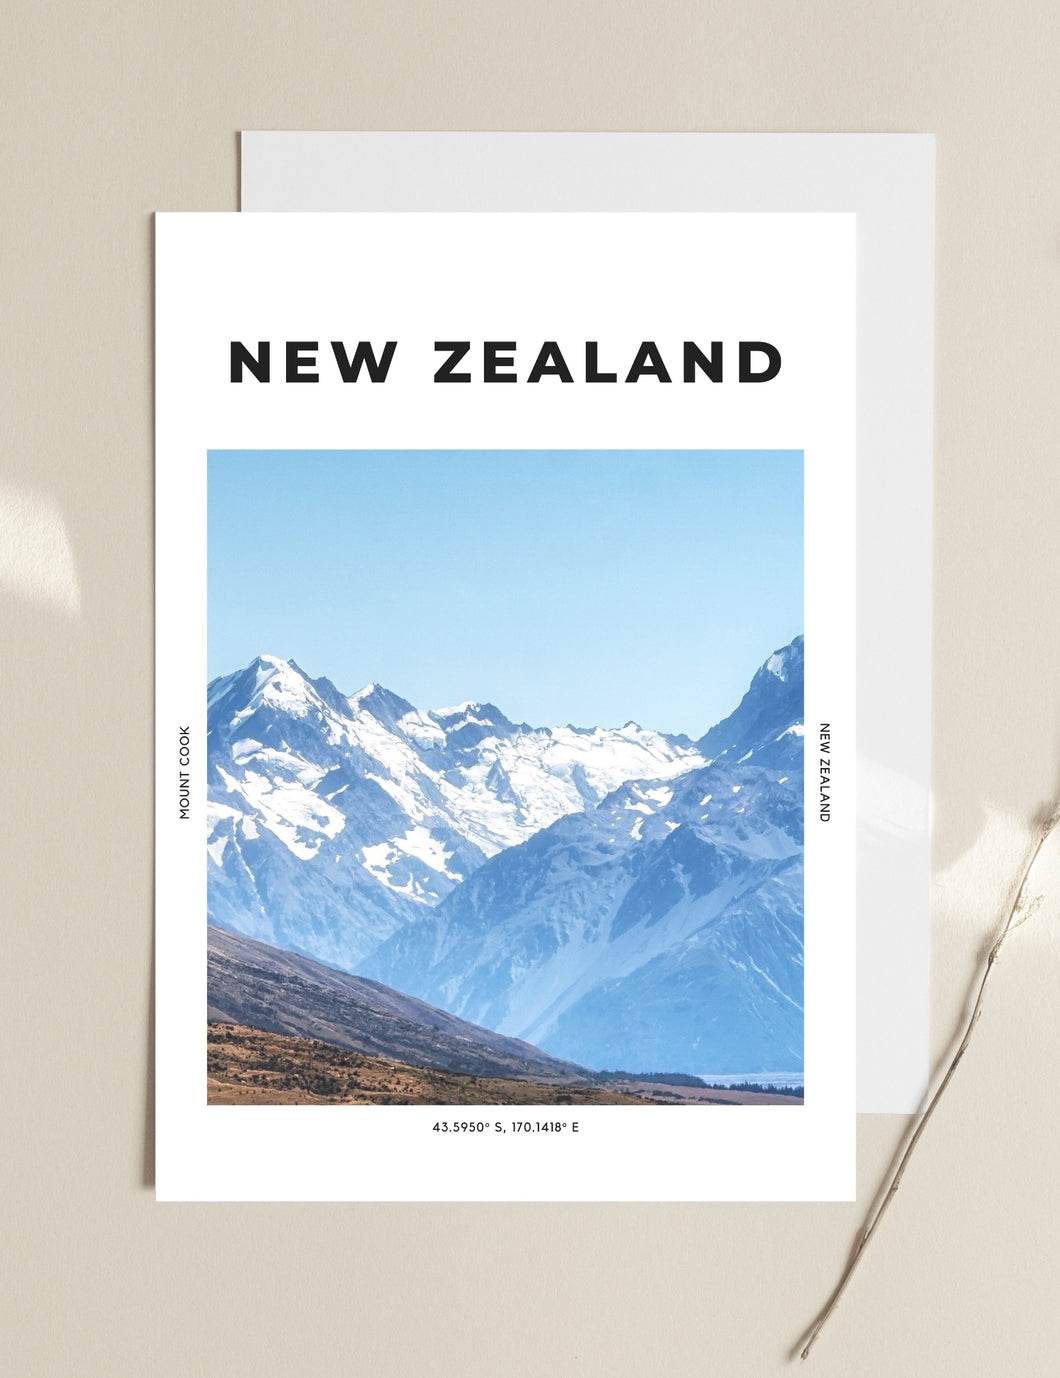 New Zealand 'Mount Cook' Print